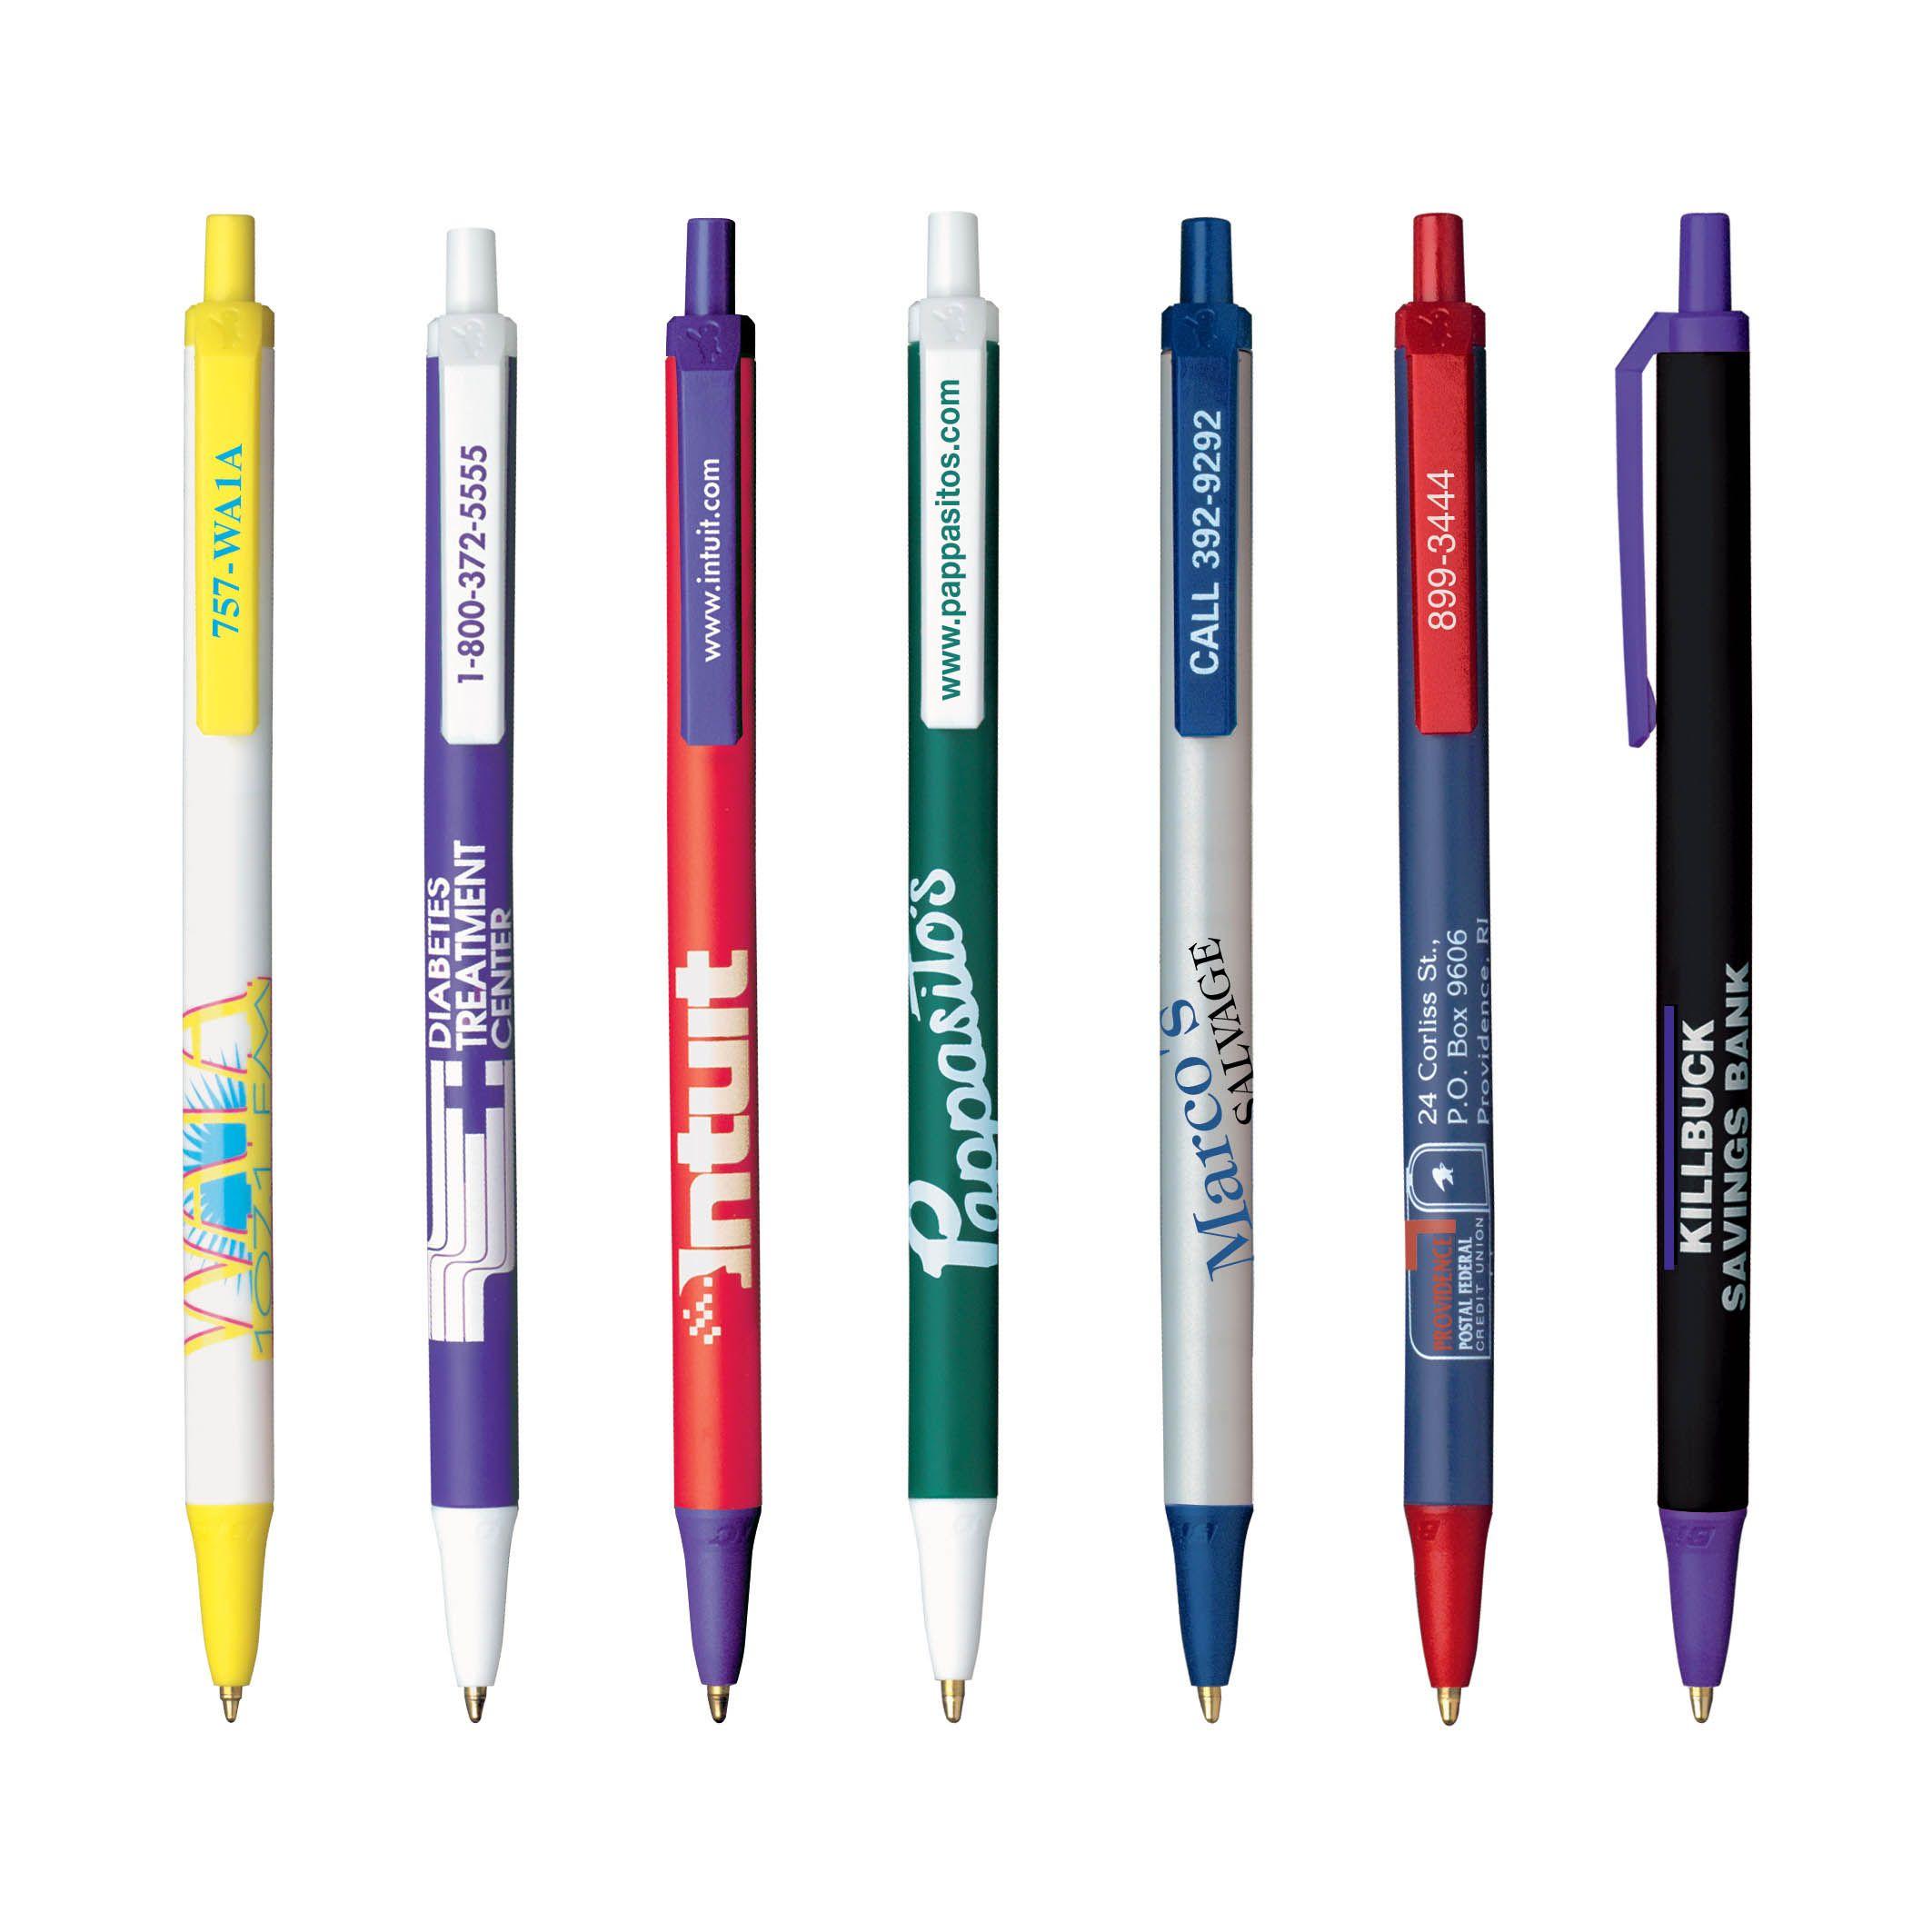 Pen Company Logo - Promotional Pens, Promo Pens, Personalized Pens